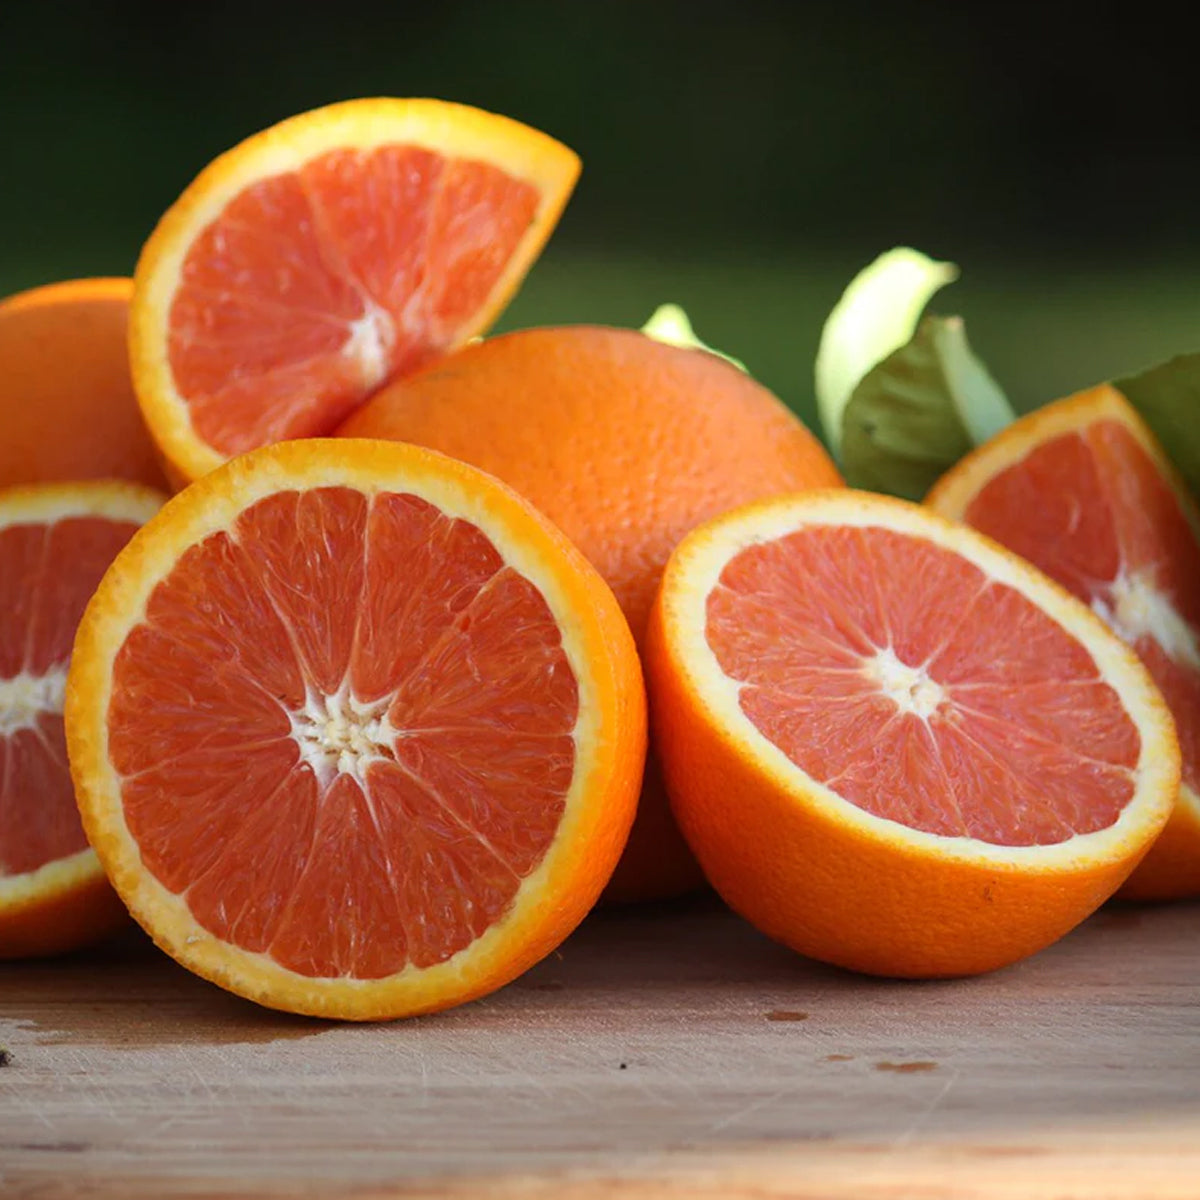 Cara Cara Orange Live Plant (Citrus sinensis 'Cara Cara')